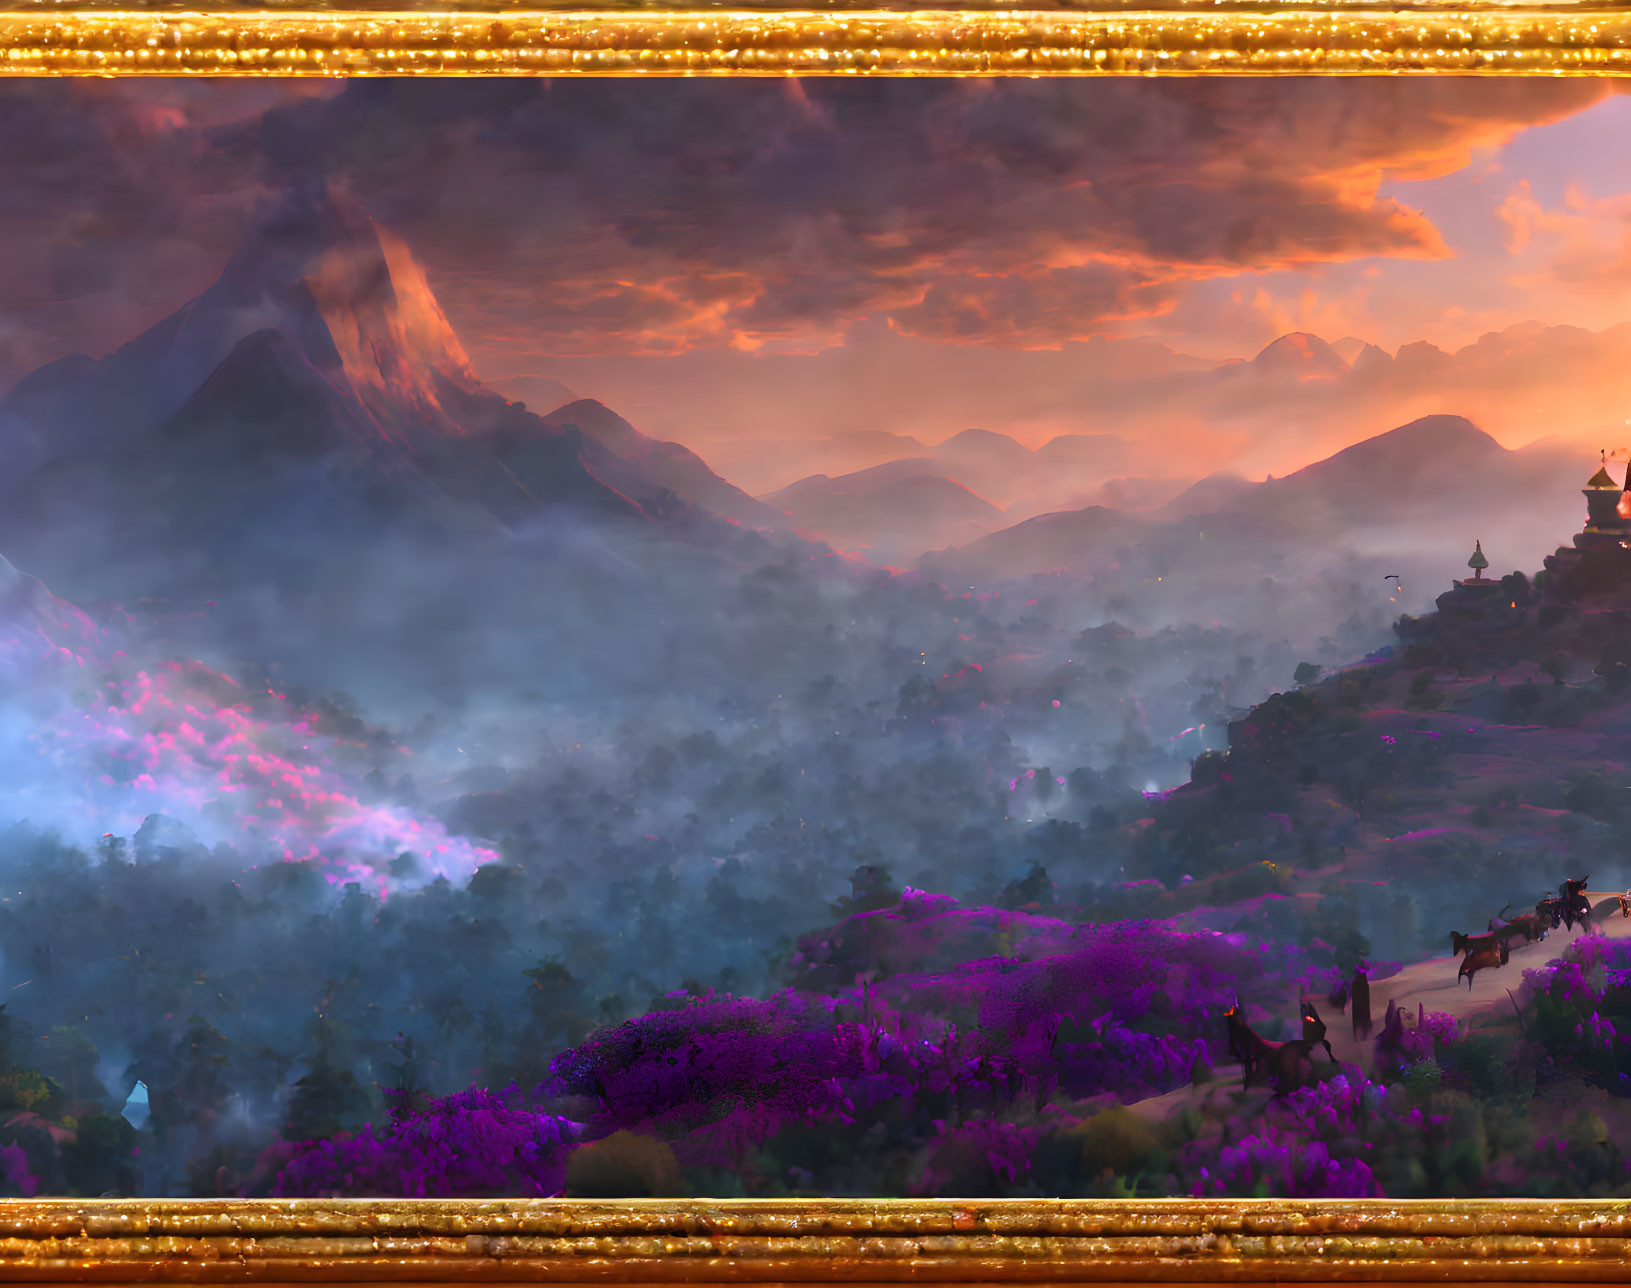 Fantastical Landscape with Purple Flora, Misty Mountains, Temple, and Luminous Sunset